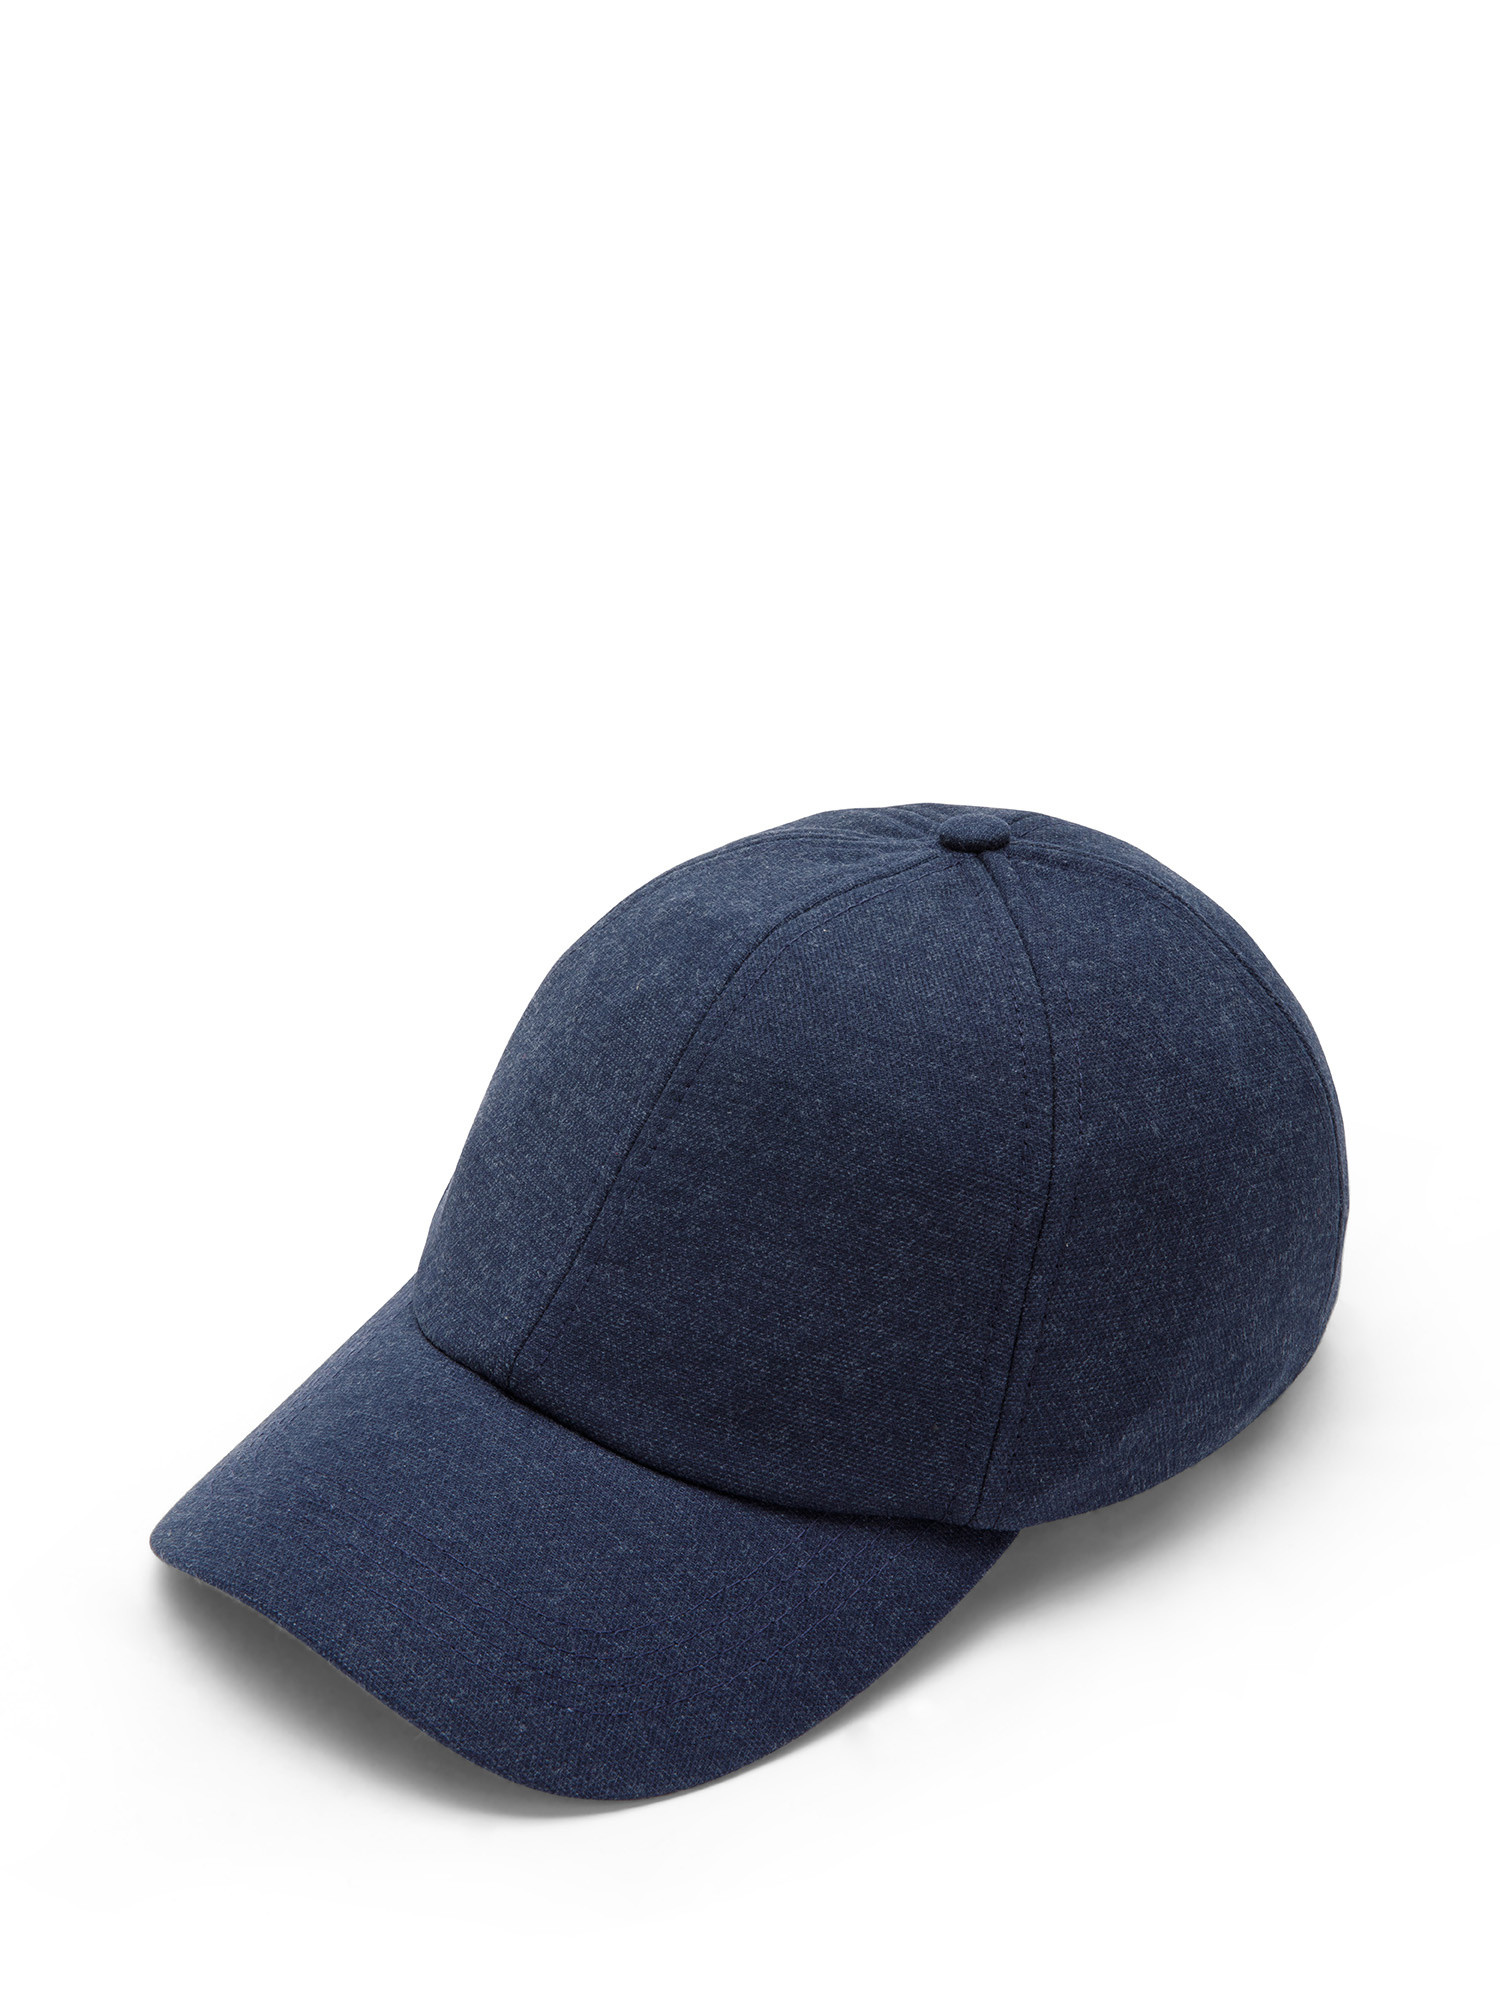 Luca D'Altieri - Baseball cap, Dark Blue, large image number 0